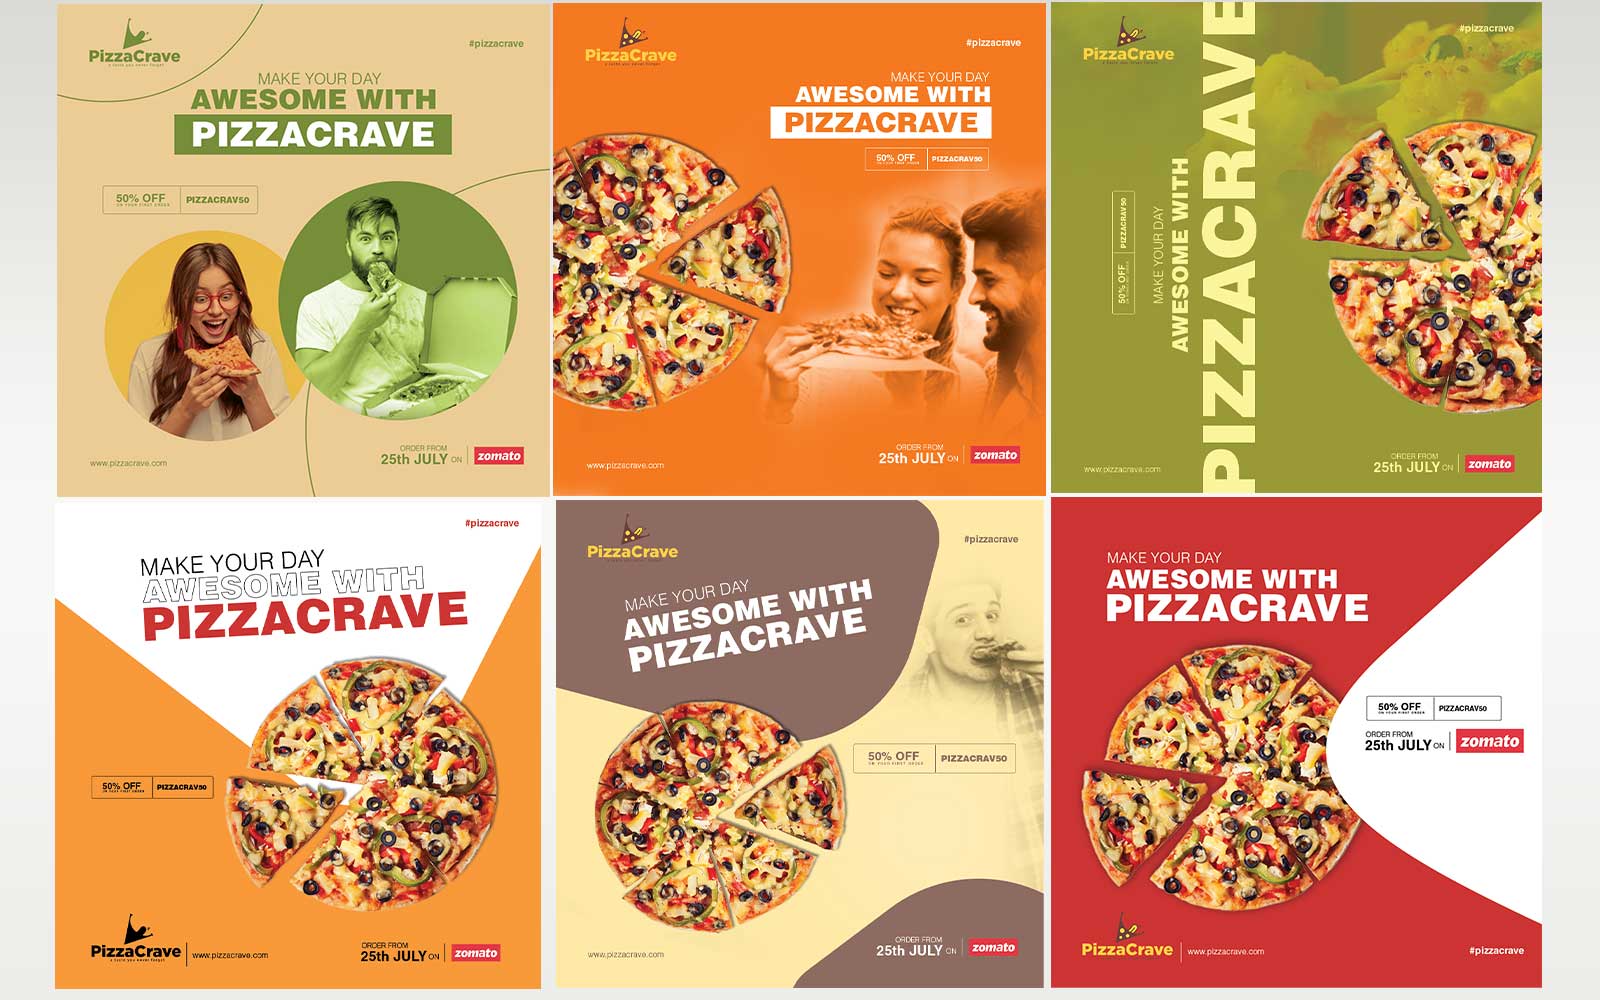 9 Food/Restaurant Instagram Template PSD Designs for Social Media